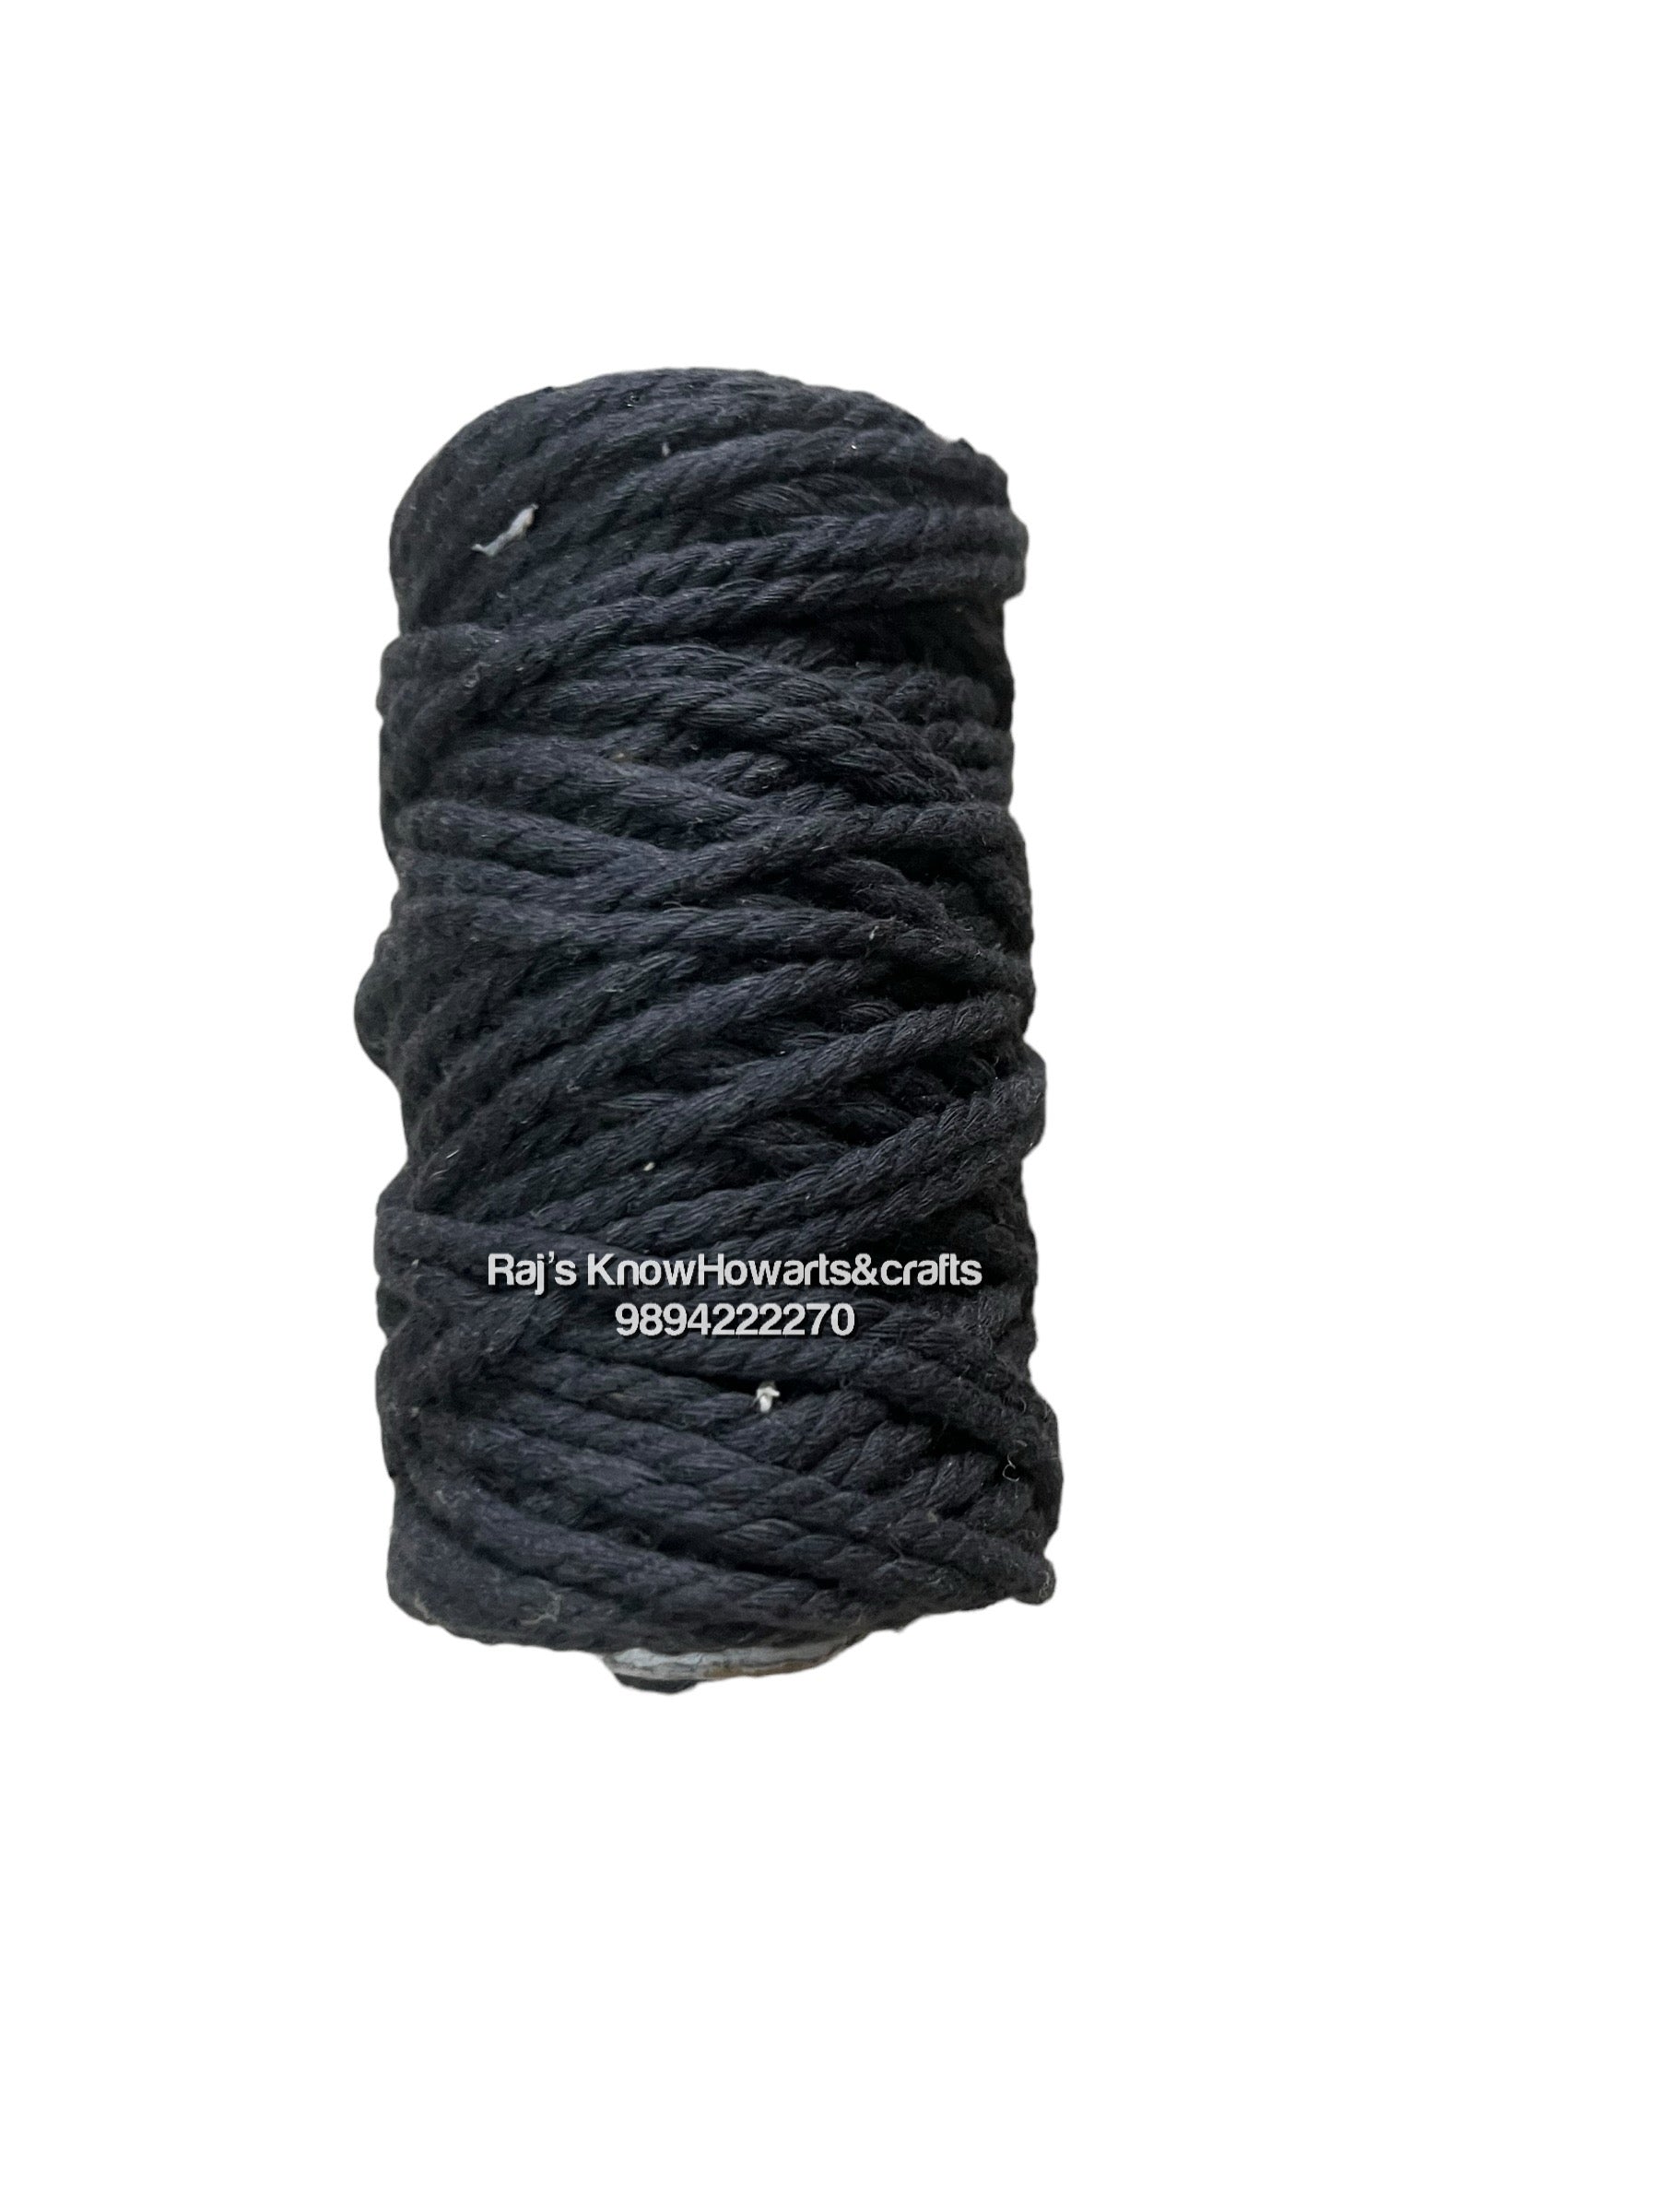 4mm cotton Chrochet thread